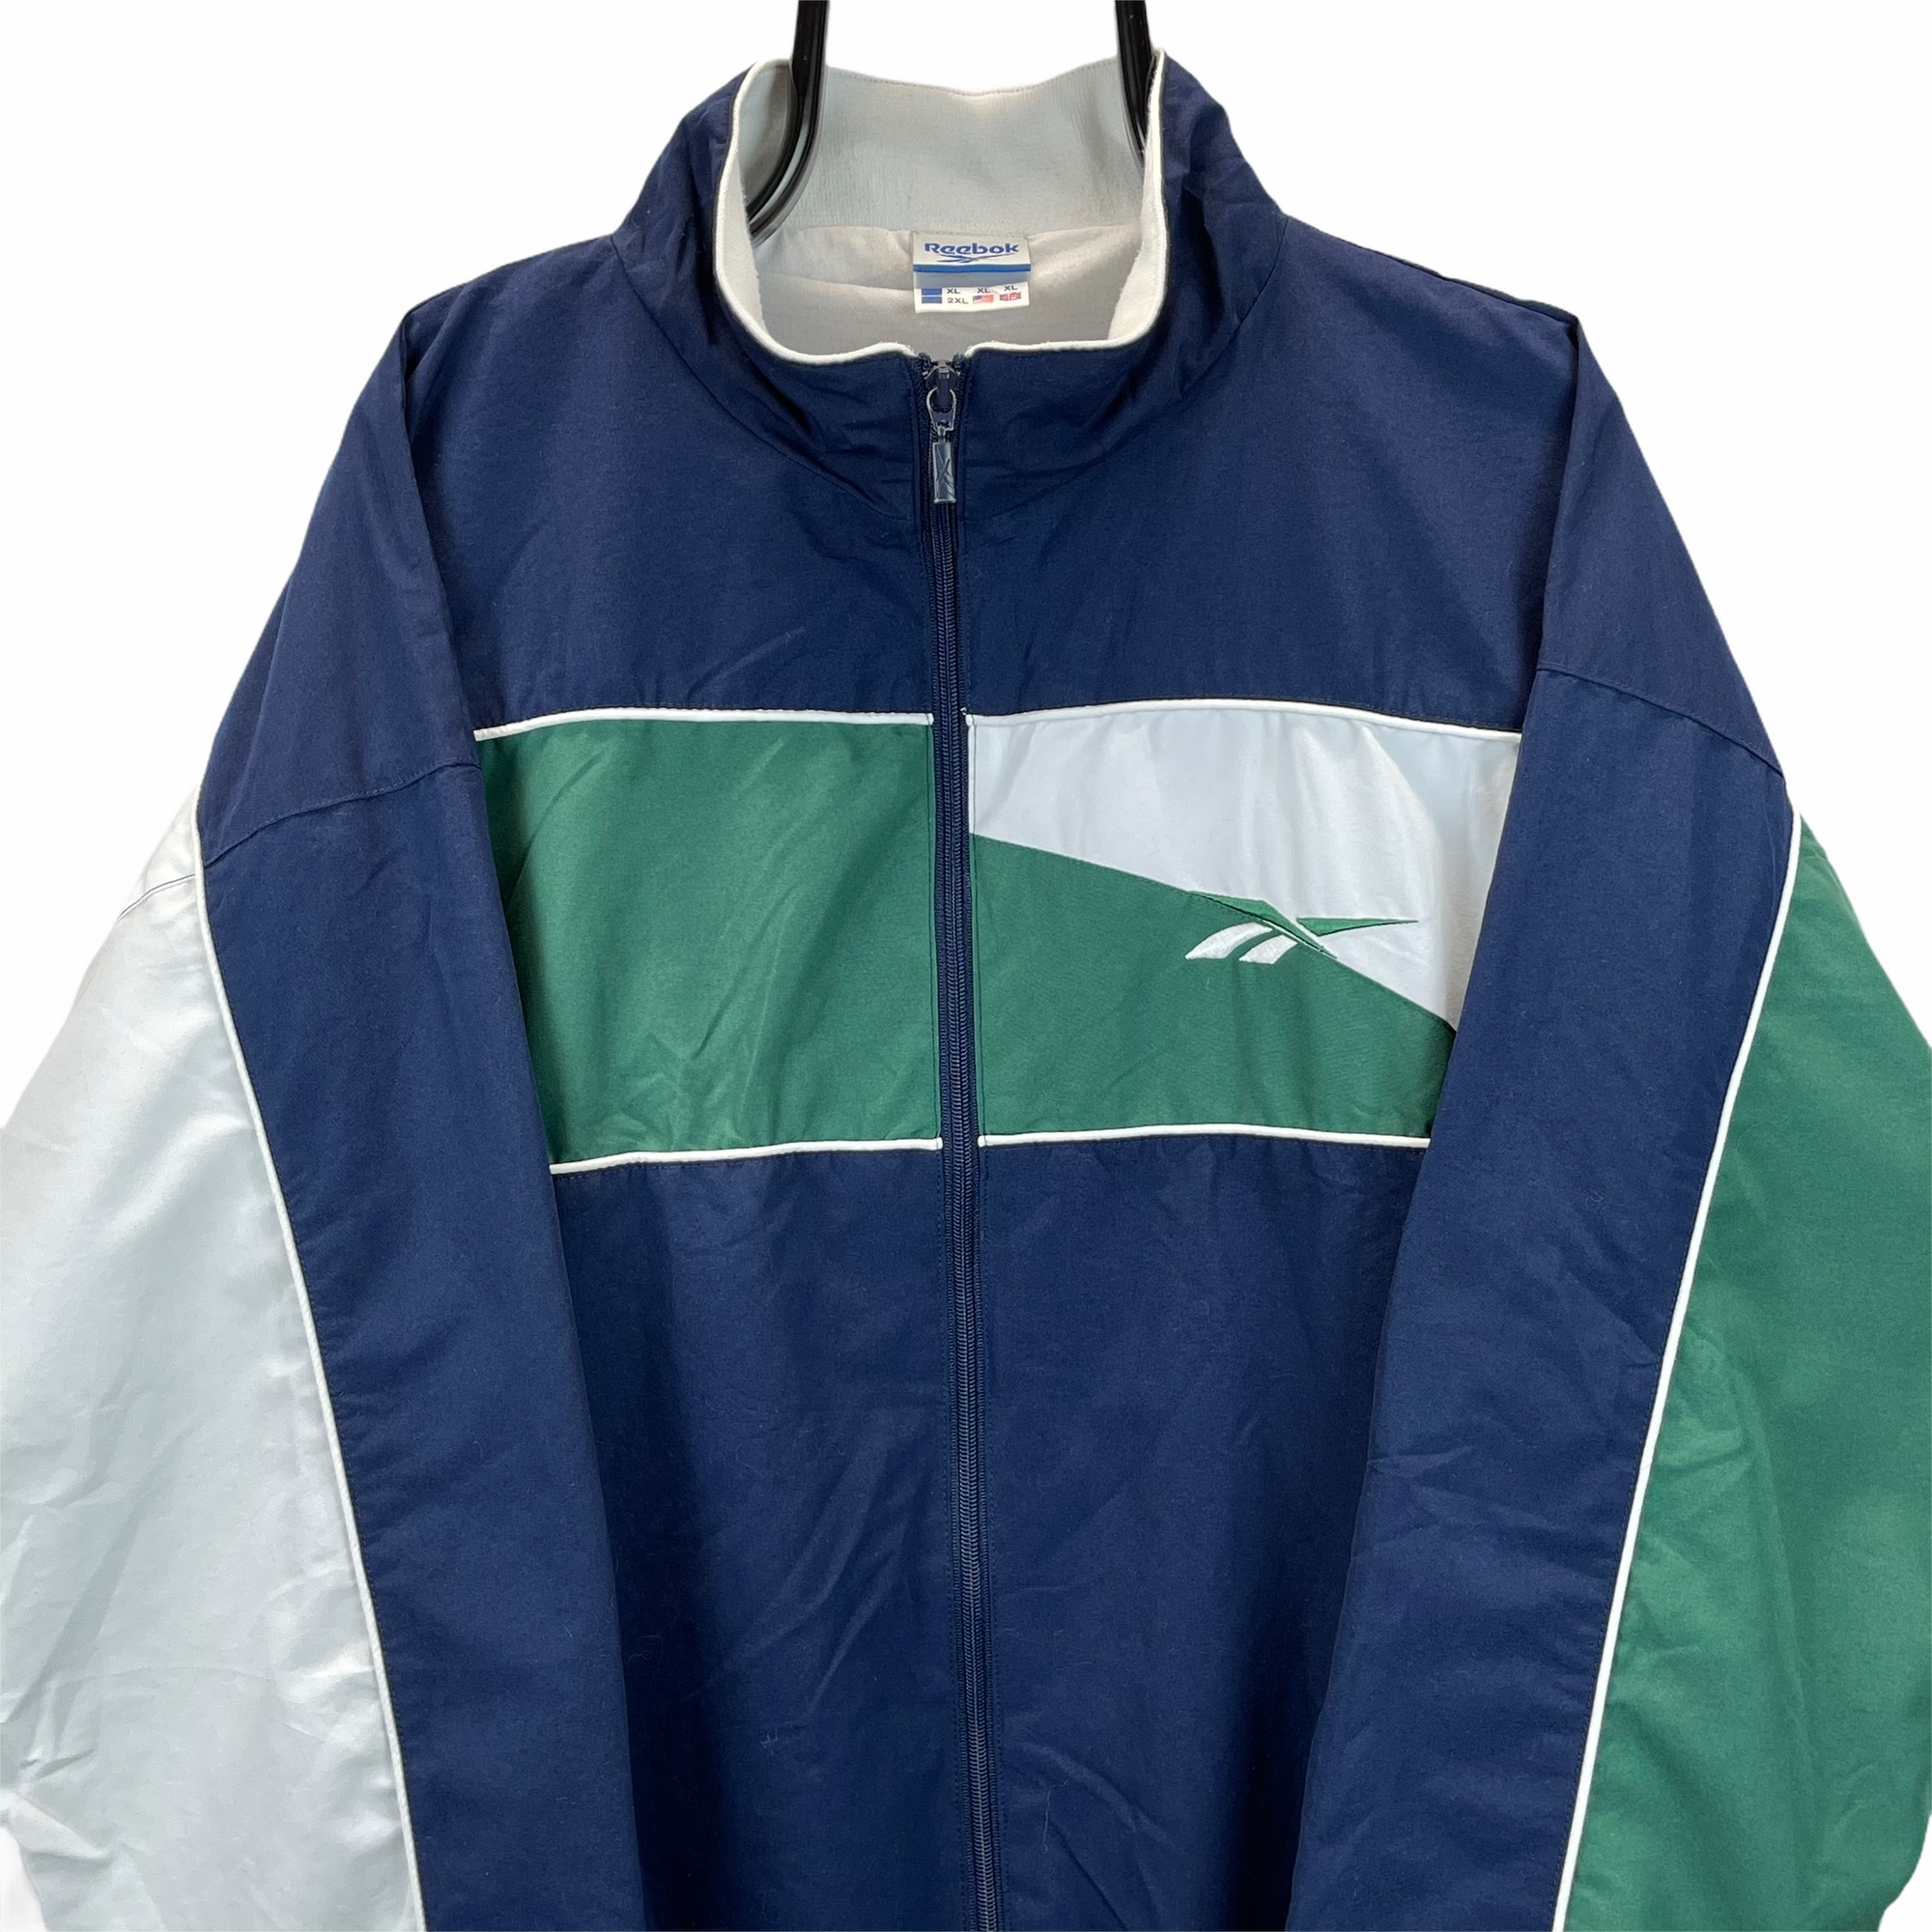 Vintage Reebok Big Logo Track Jacket in Navy, Green & White - Men's XXL/Women's XXXL